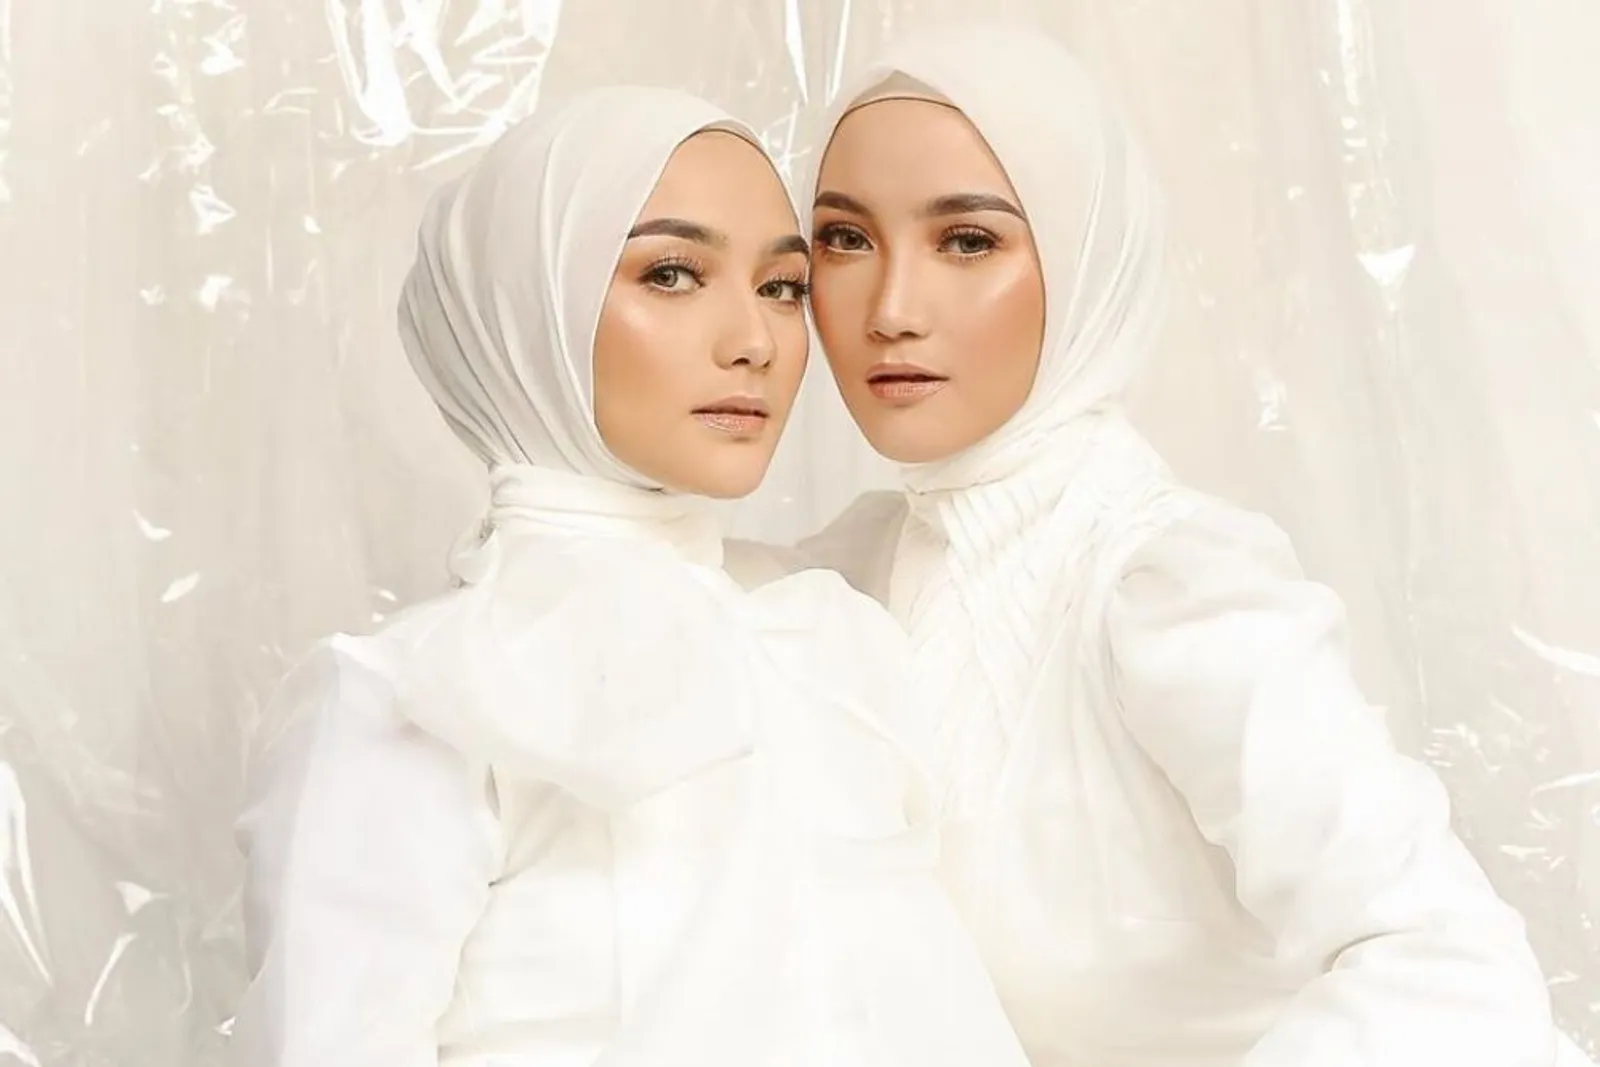 Sister Goals! Begini Perbandingan Riasan Erica Putri dan Citra Kirana